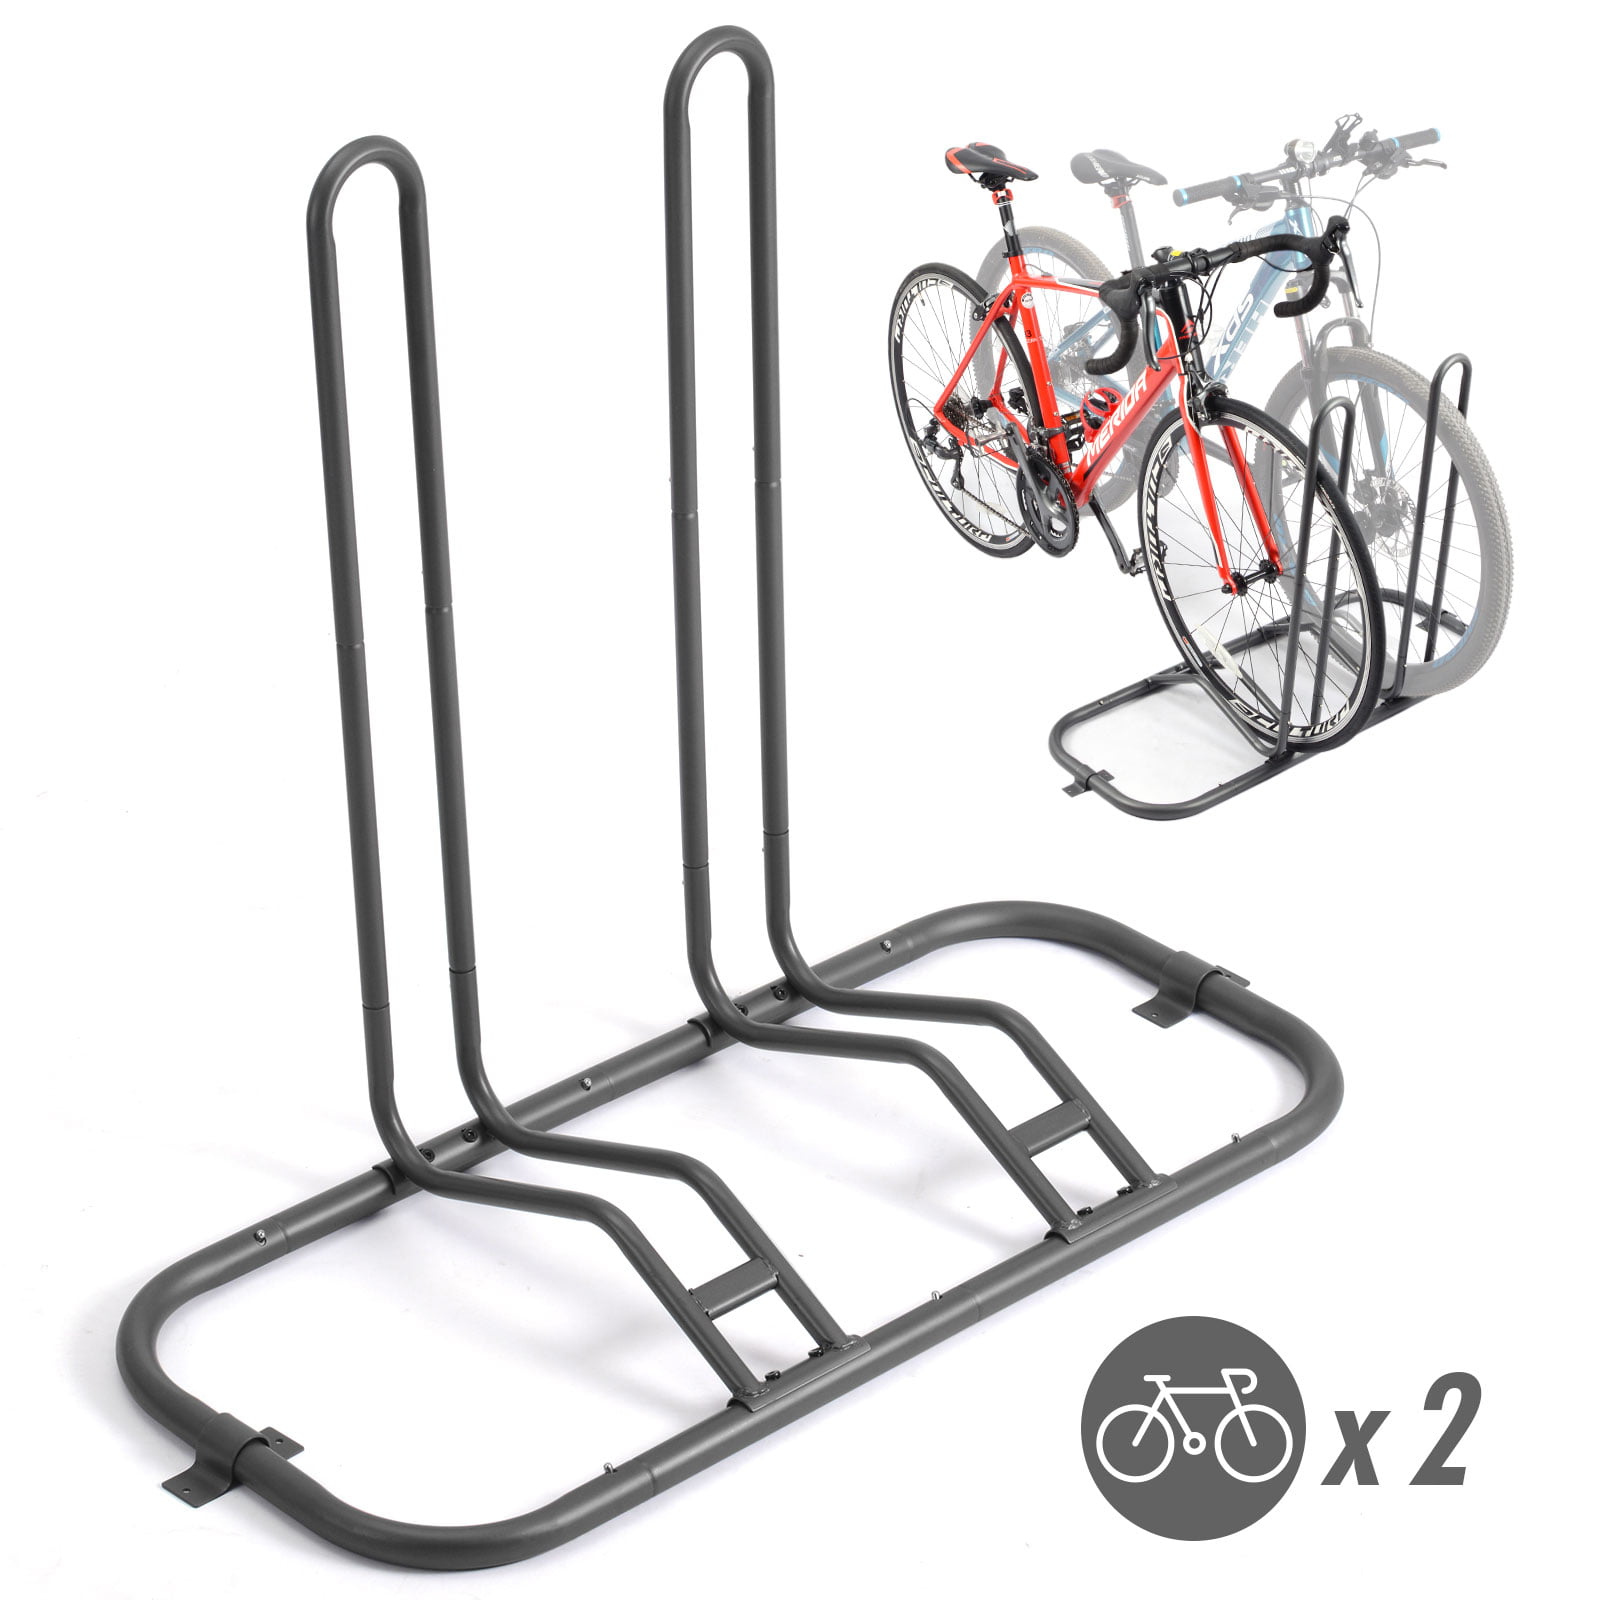 HD Steel 1-6 Bikes Floor Mount Bicycle Park Storage Parking Rack Stand 2 3 4 5 